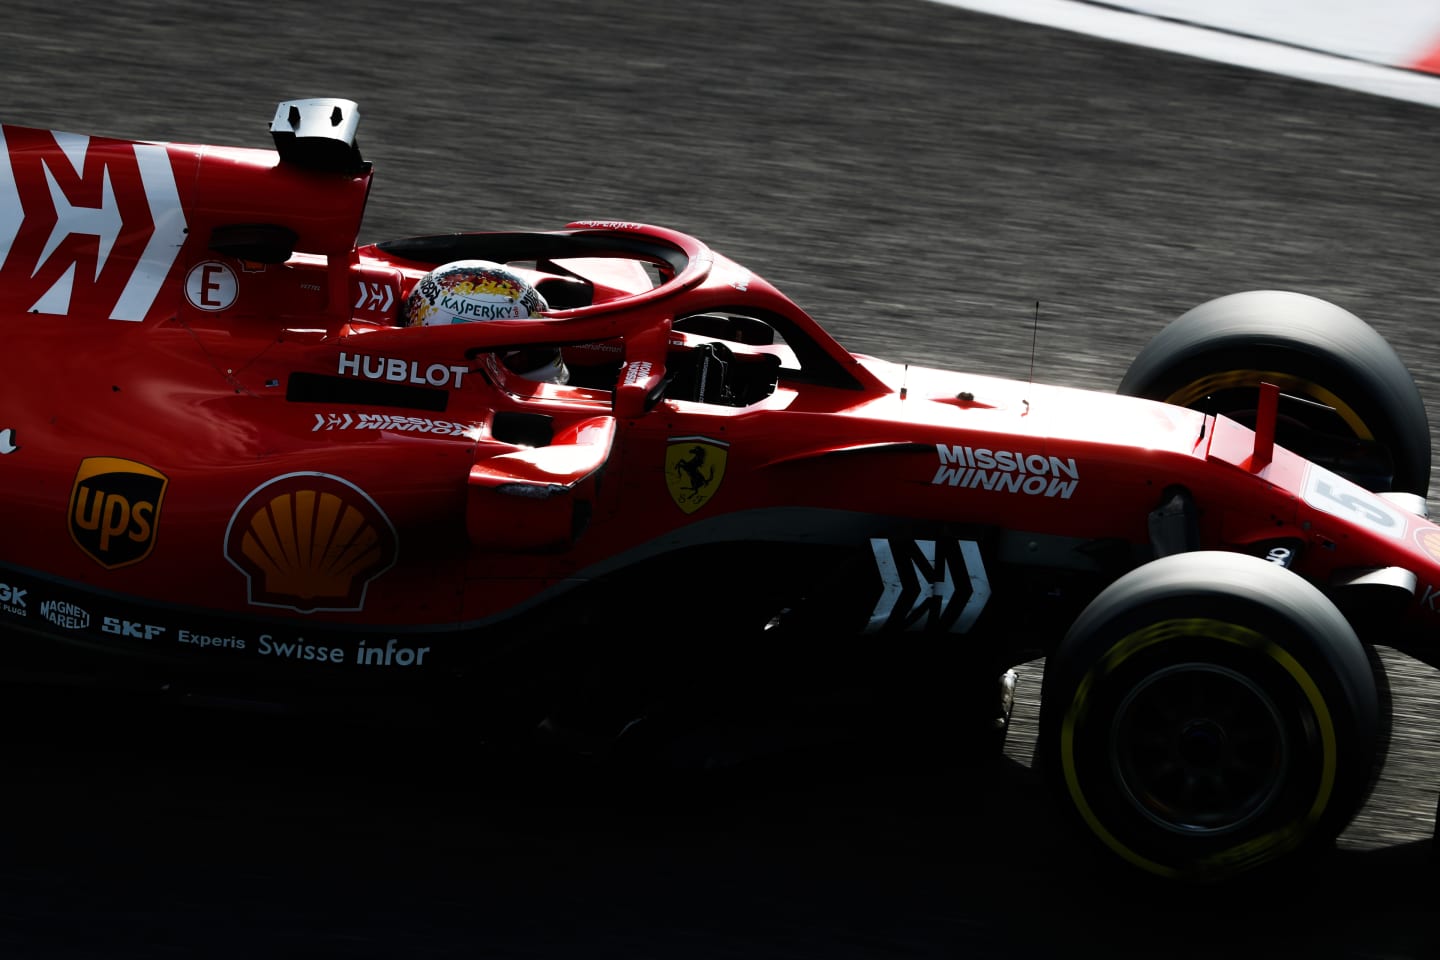 SUZUKA, JAPAN - OCTOBER 07: Sebastian Vettel, Ferrari SF71H during the Japanese GP at Suzuka on